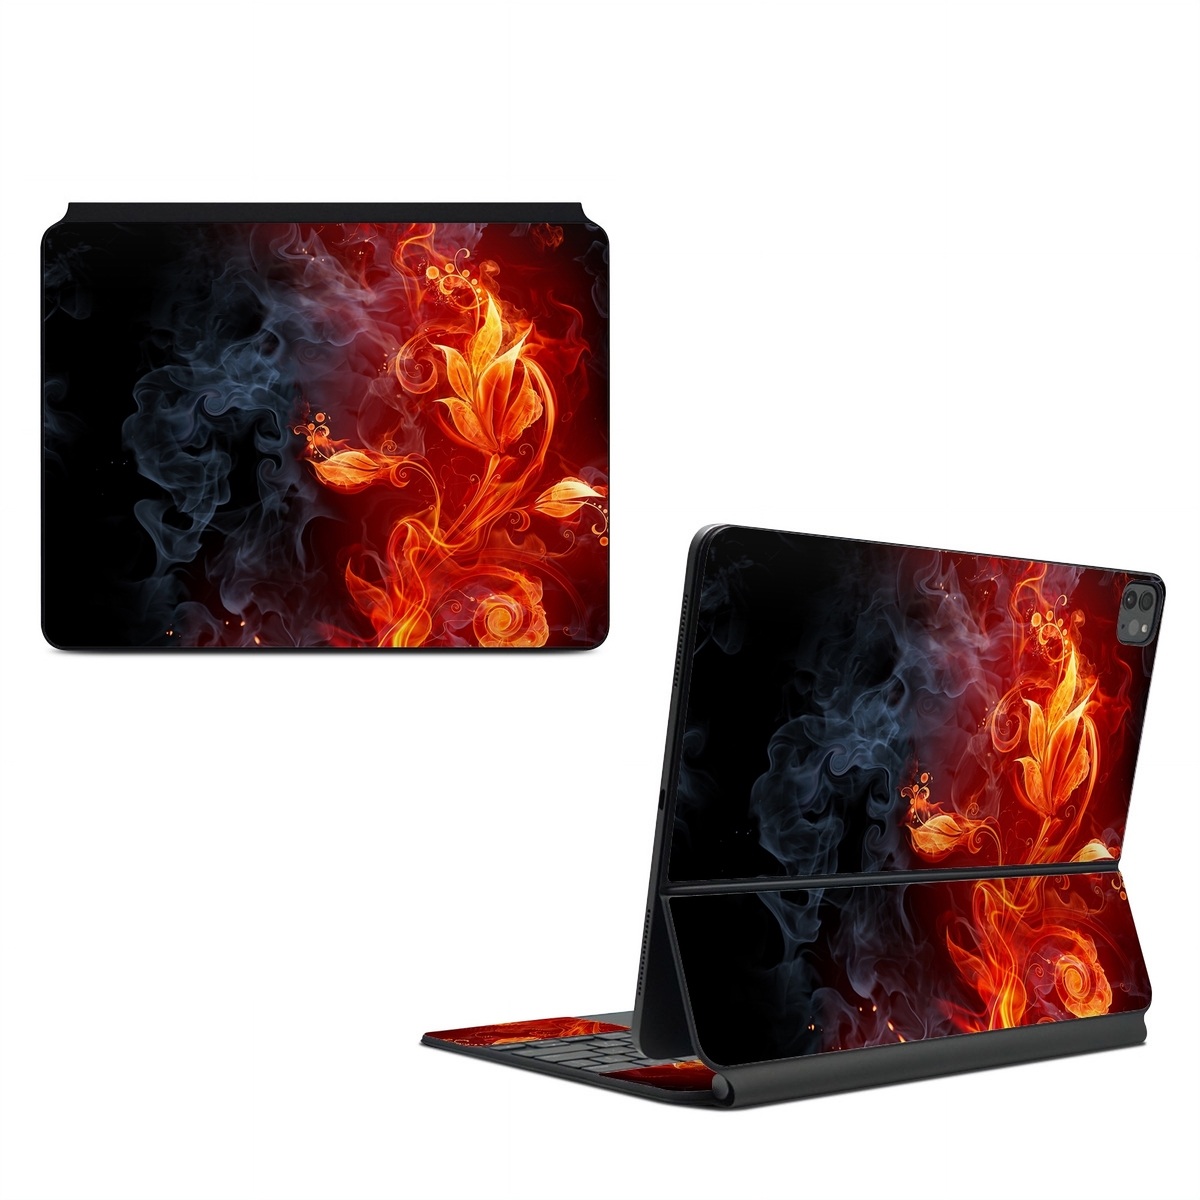 Magic Keyboard for iPad Series Skin design of Flame, Fire, Heat, Red, Orange, Fractal art, Graphic design, Geological phenomenon, Design, Organism, with black, red, orange colors